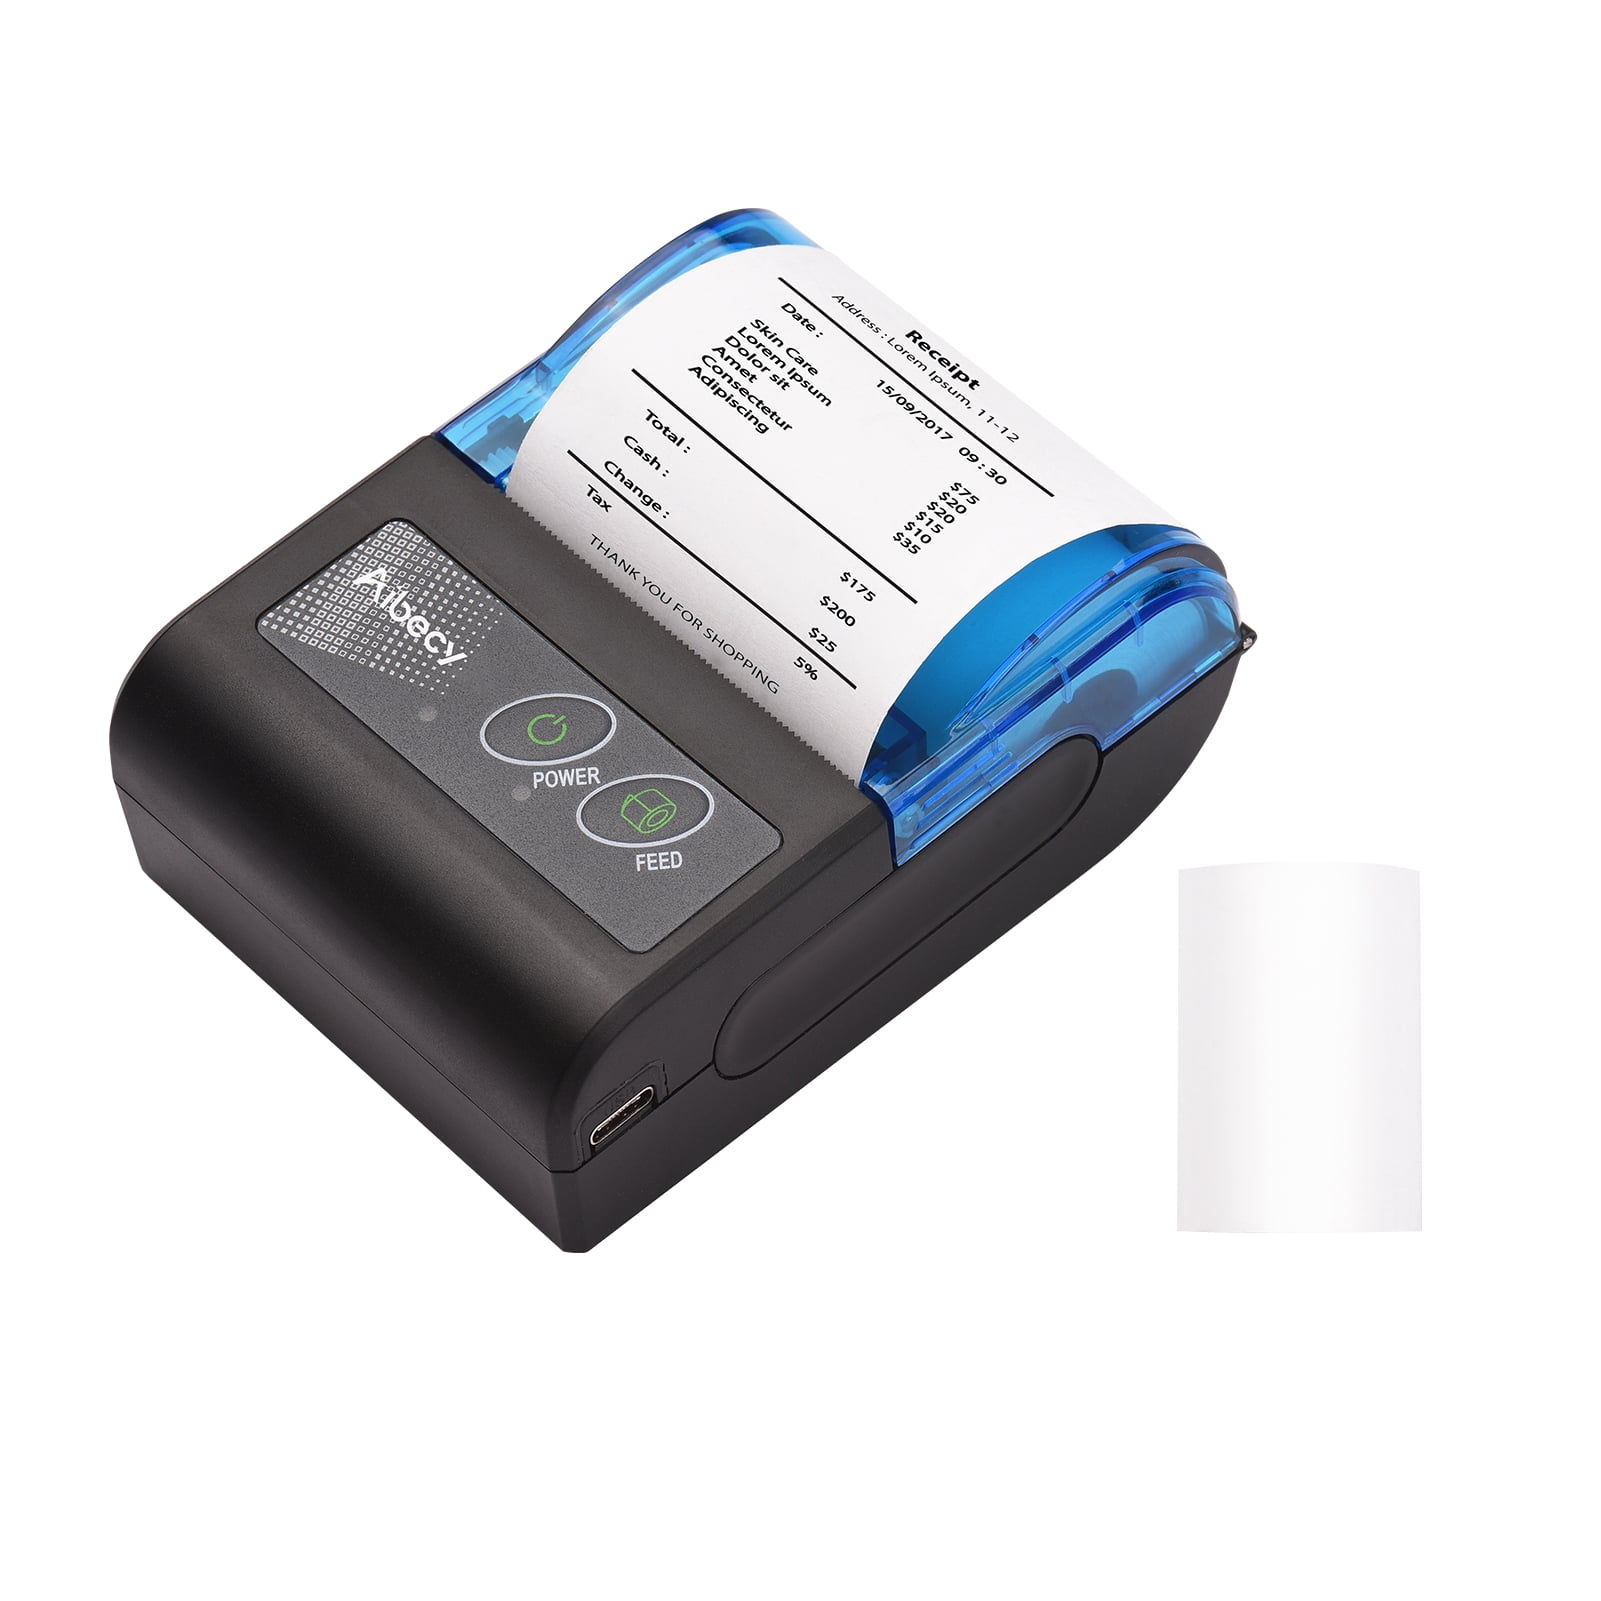 Portable Mini Thermal Printer, Bluetooth Mobile Printer for iOS & Android